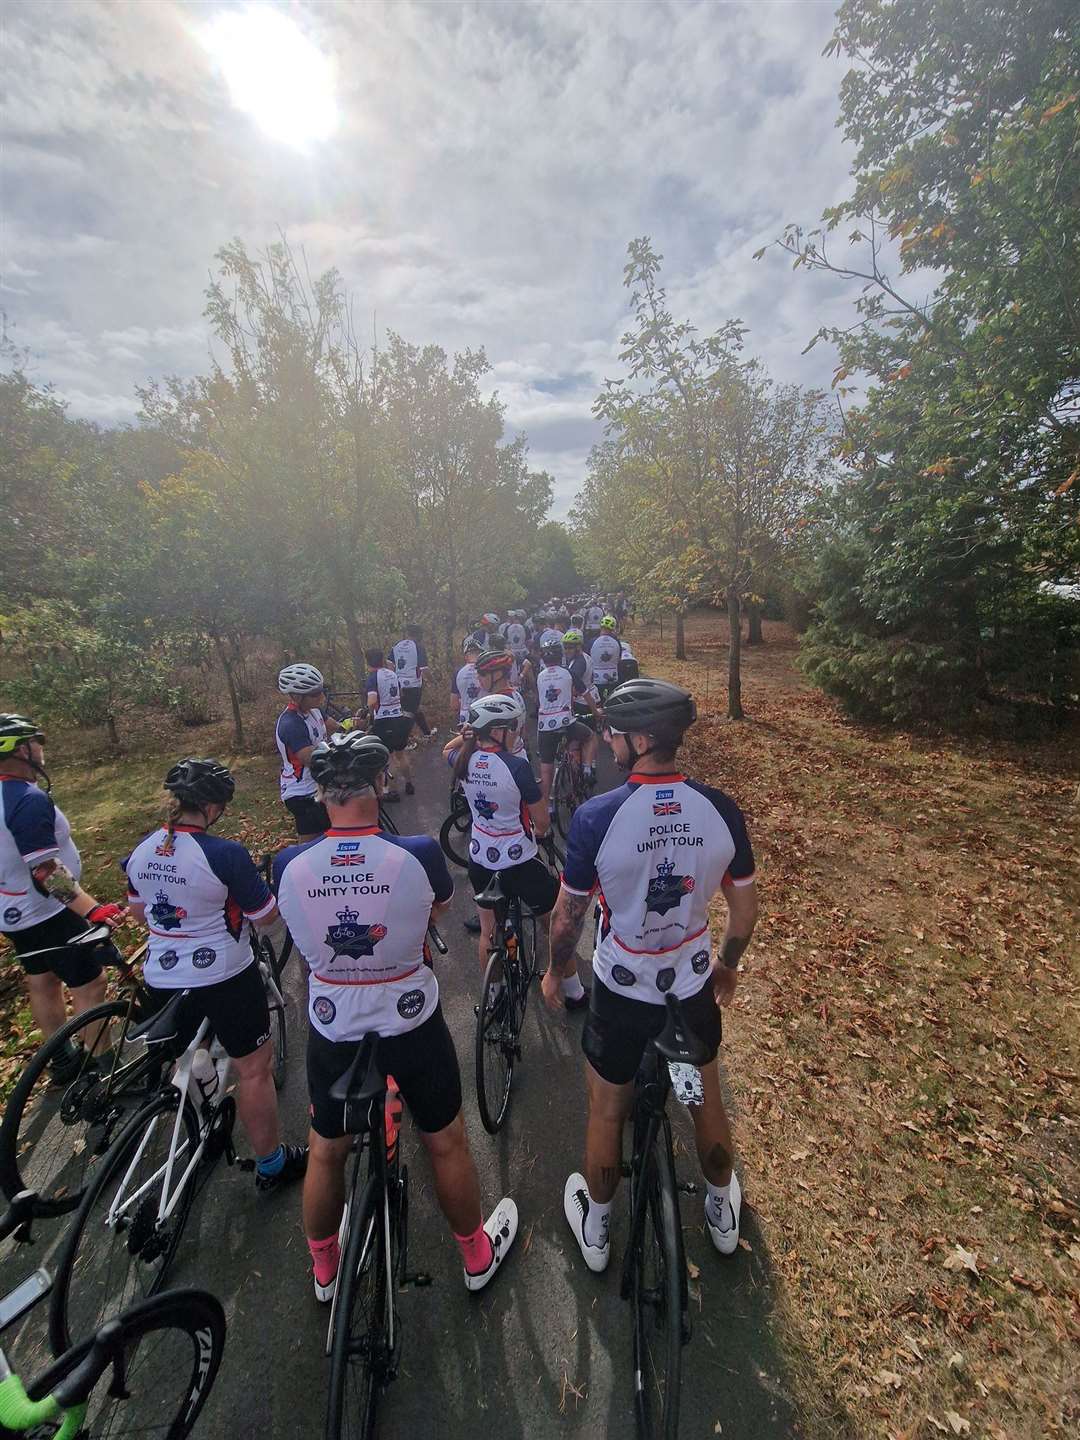 Cyclists take part in the Police Unity Tour (Festus Akinbusoye/PA)